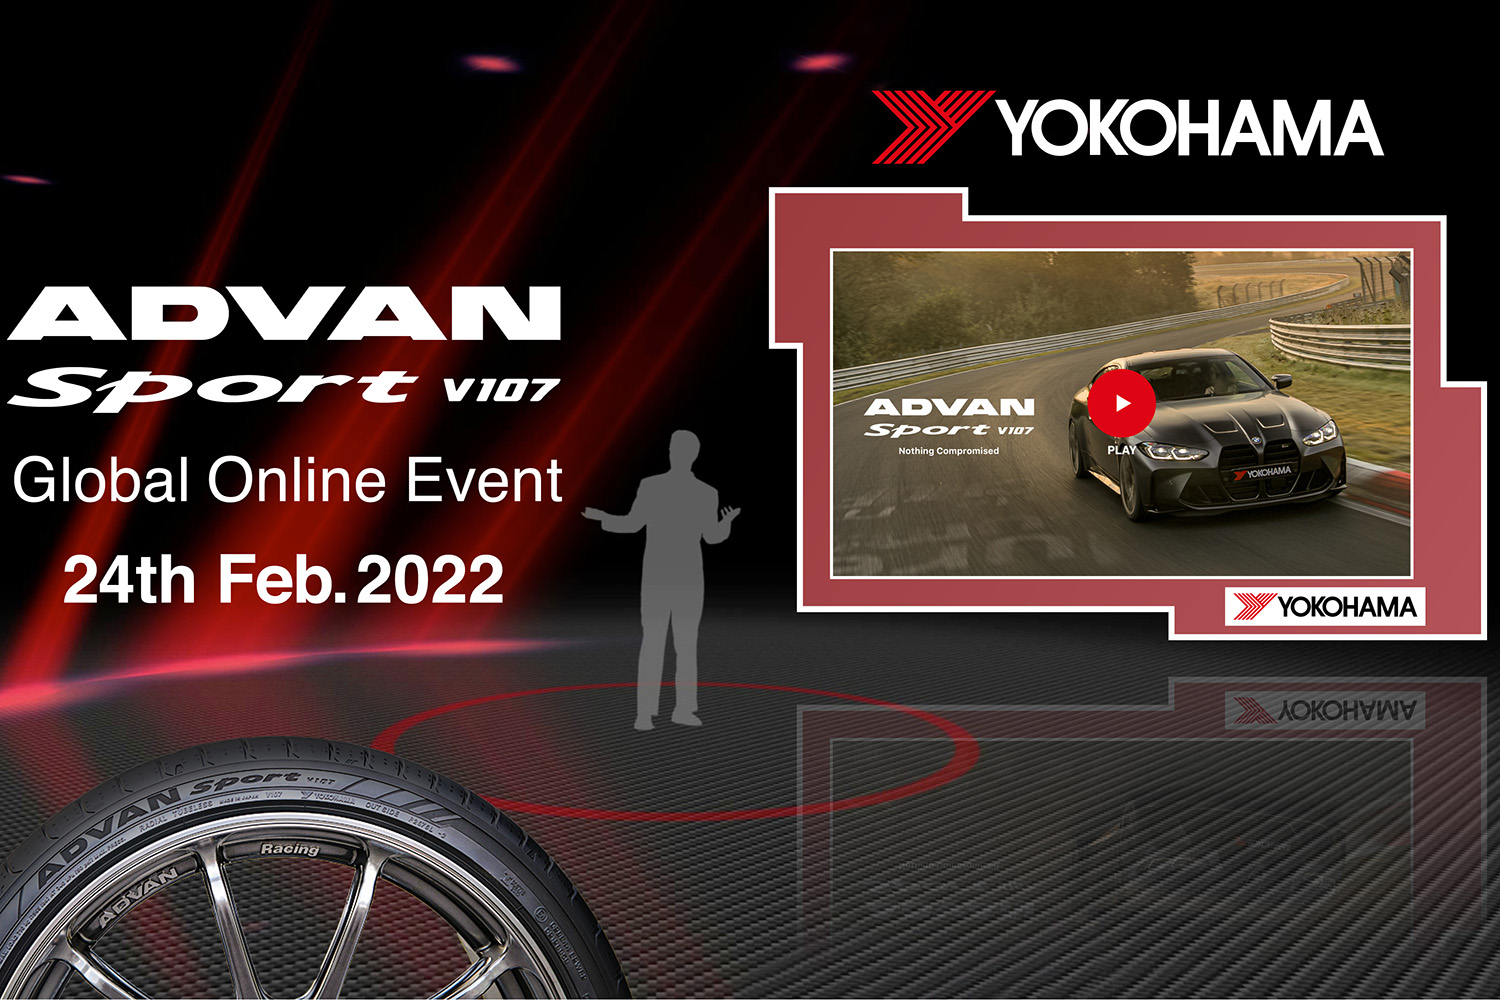 「ADVAN Sport V107」のオンラインイベント動画のイメージ